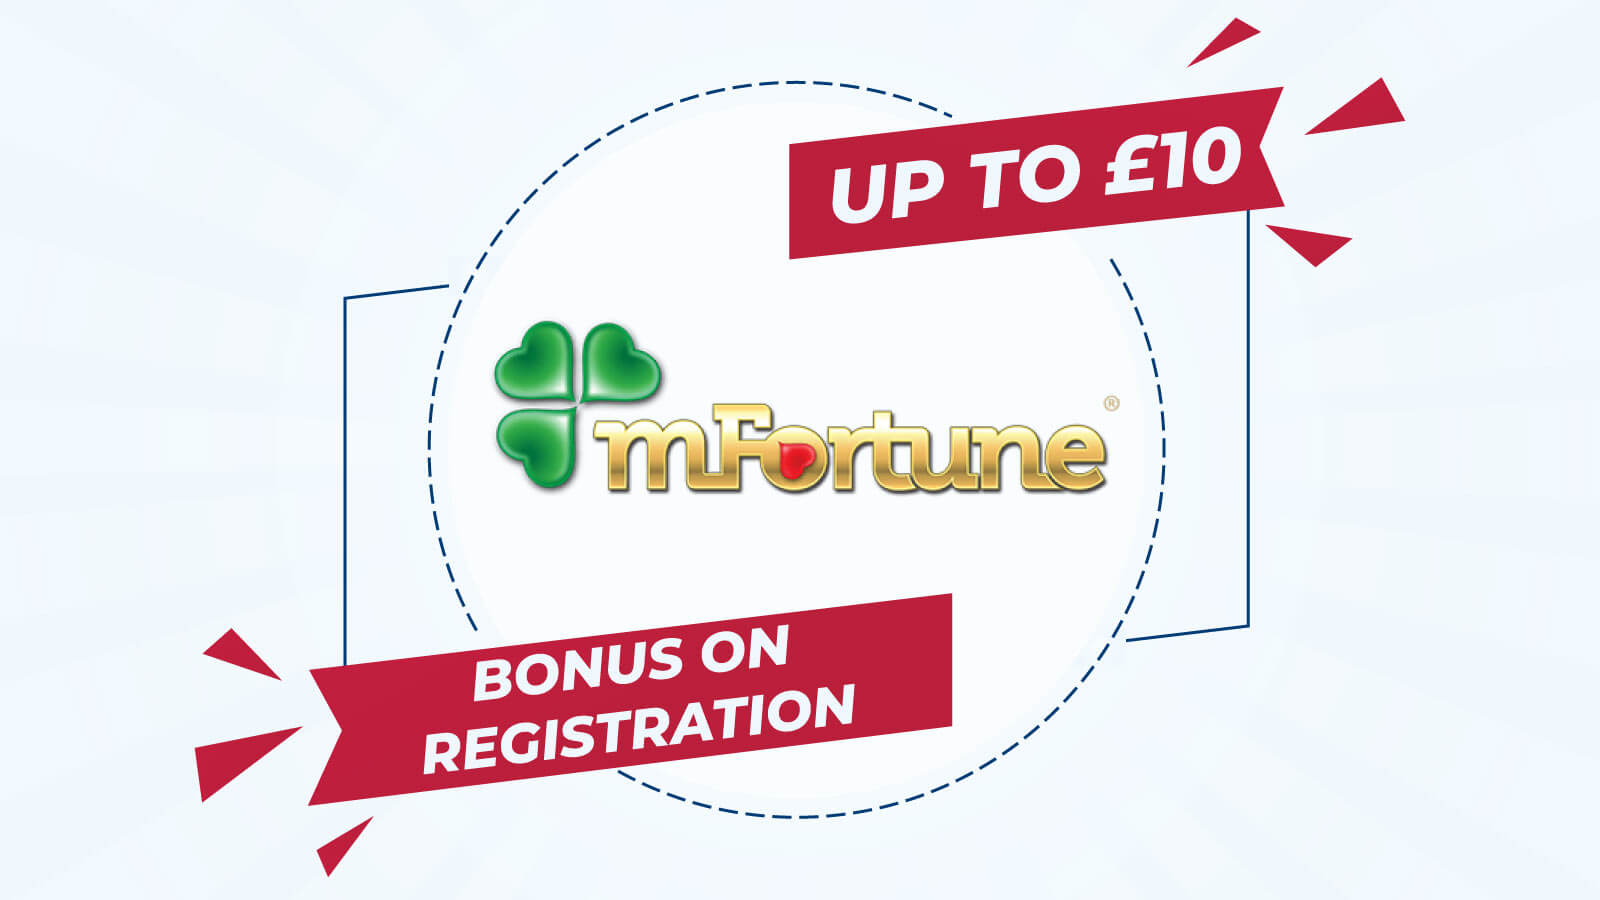 Up To £10 Bonus on Registration at mFortune Casino